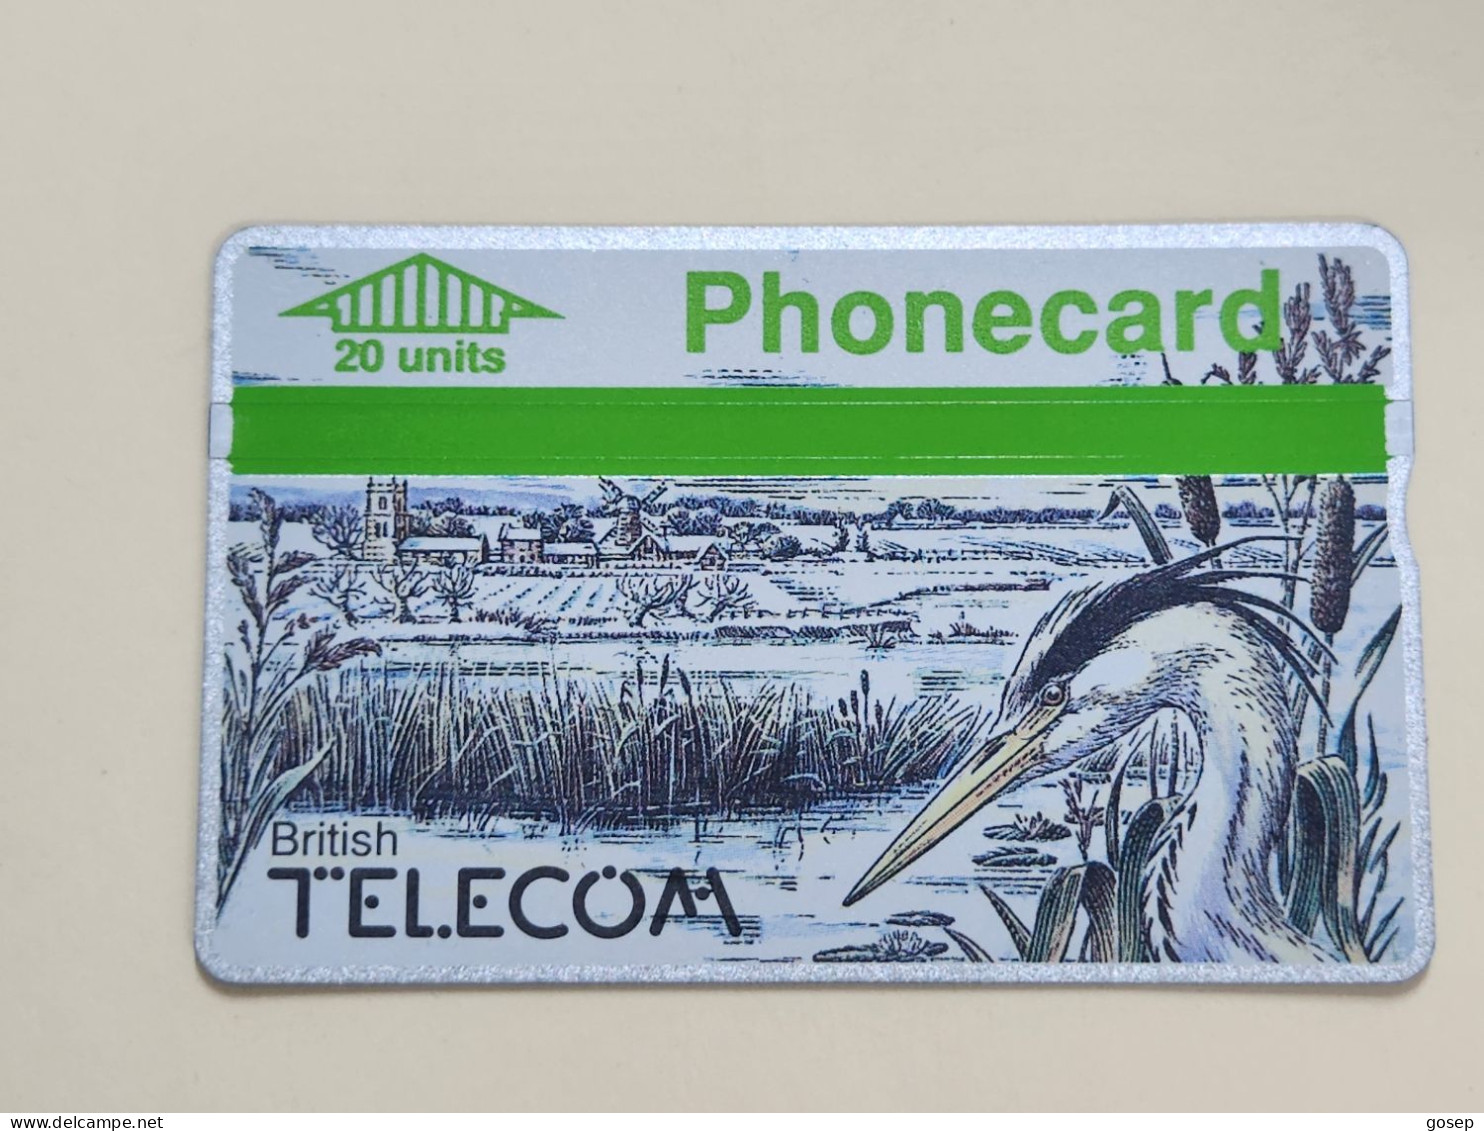 United Kingdom-(BTC011)-WINTER 1989-Heron-(283)(20units)(908F00119)price Cataloge 6.00£ Mint+1card Prepiad Free - BT Souvenir